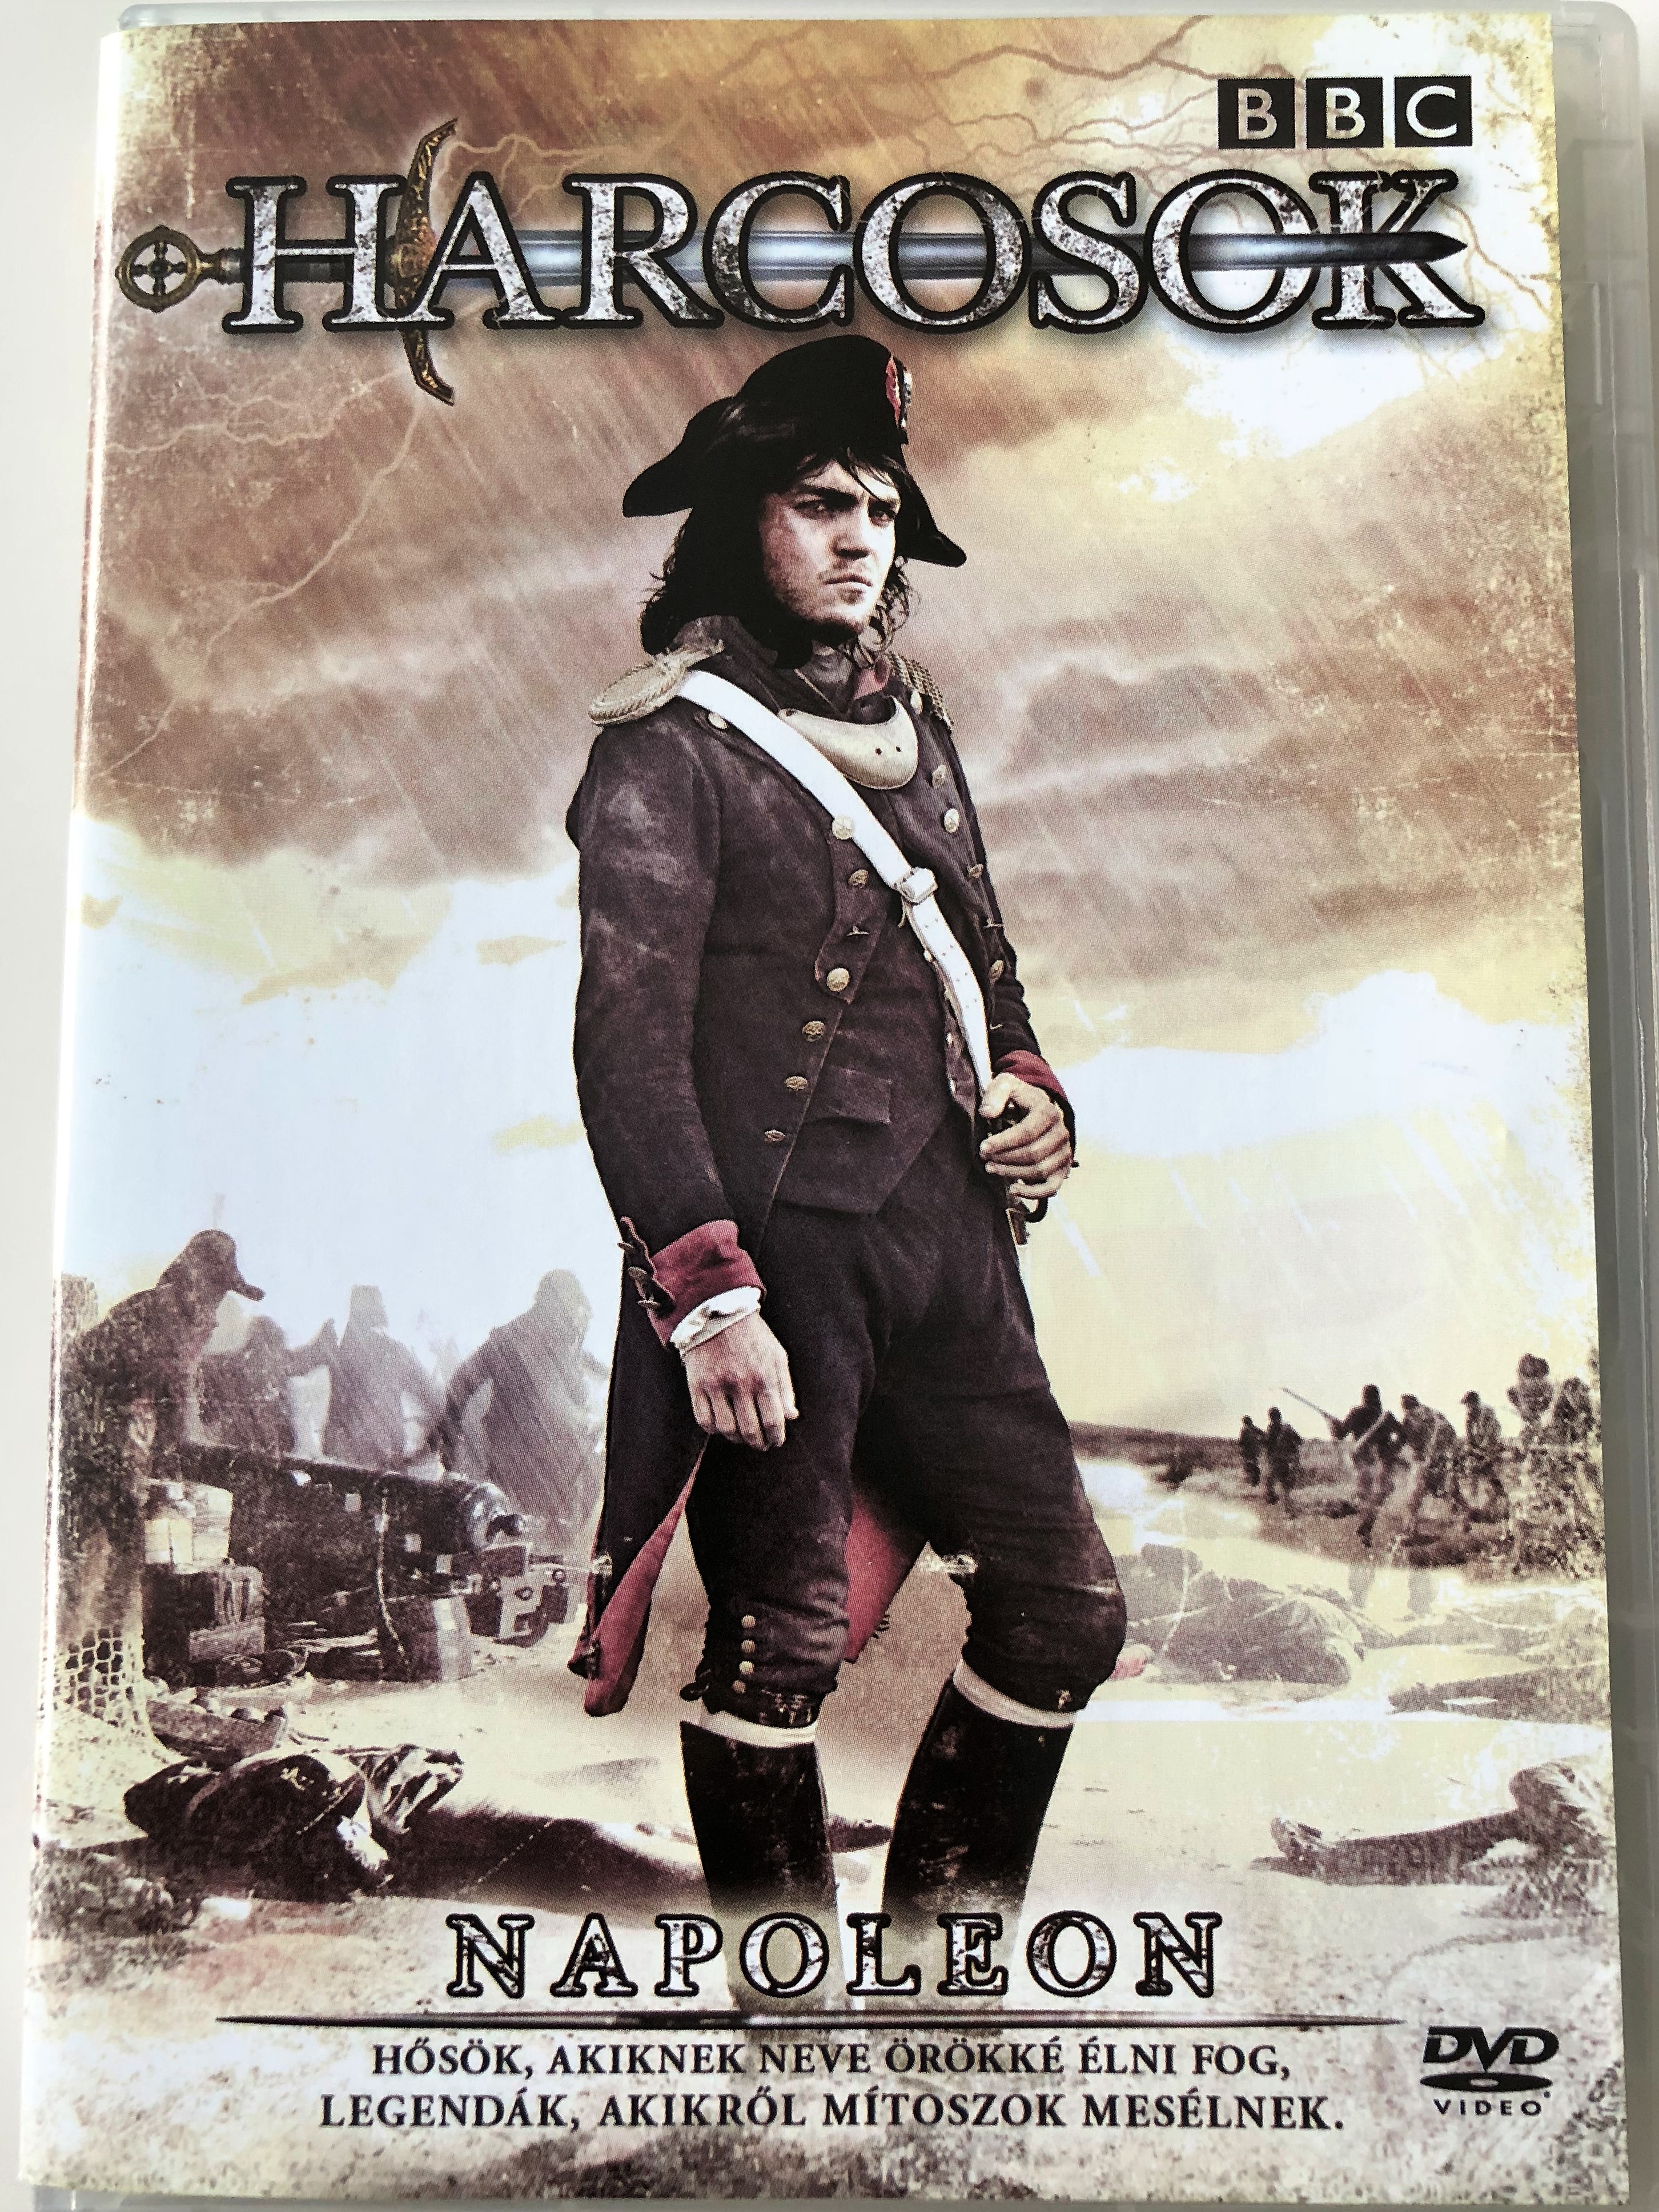 heroes-and-villains-napoleon-dvd-harcosok-bbc-directed-and-written-by-nick-murphy-starring-rob-brydon-richard-mccabe-tom-burke-laura-greenwood-bbc-historical-tv-drama-series-1-.jpg